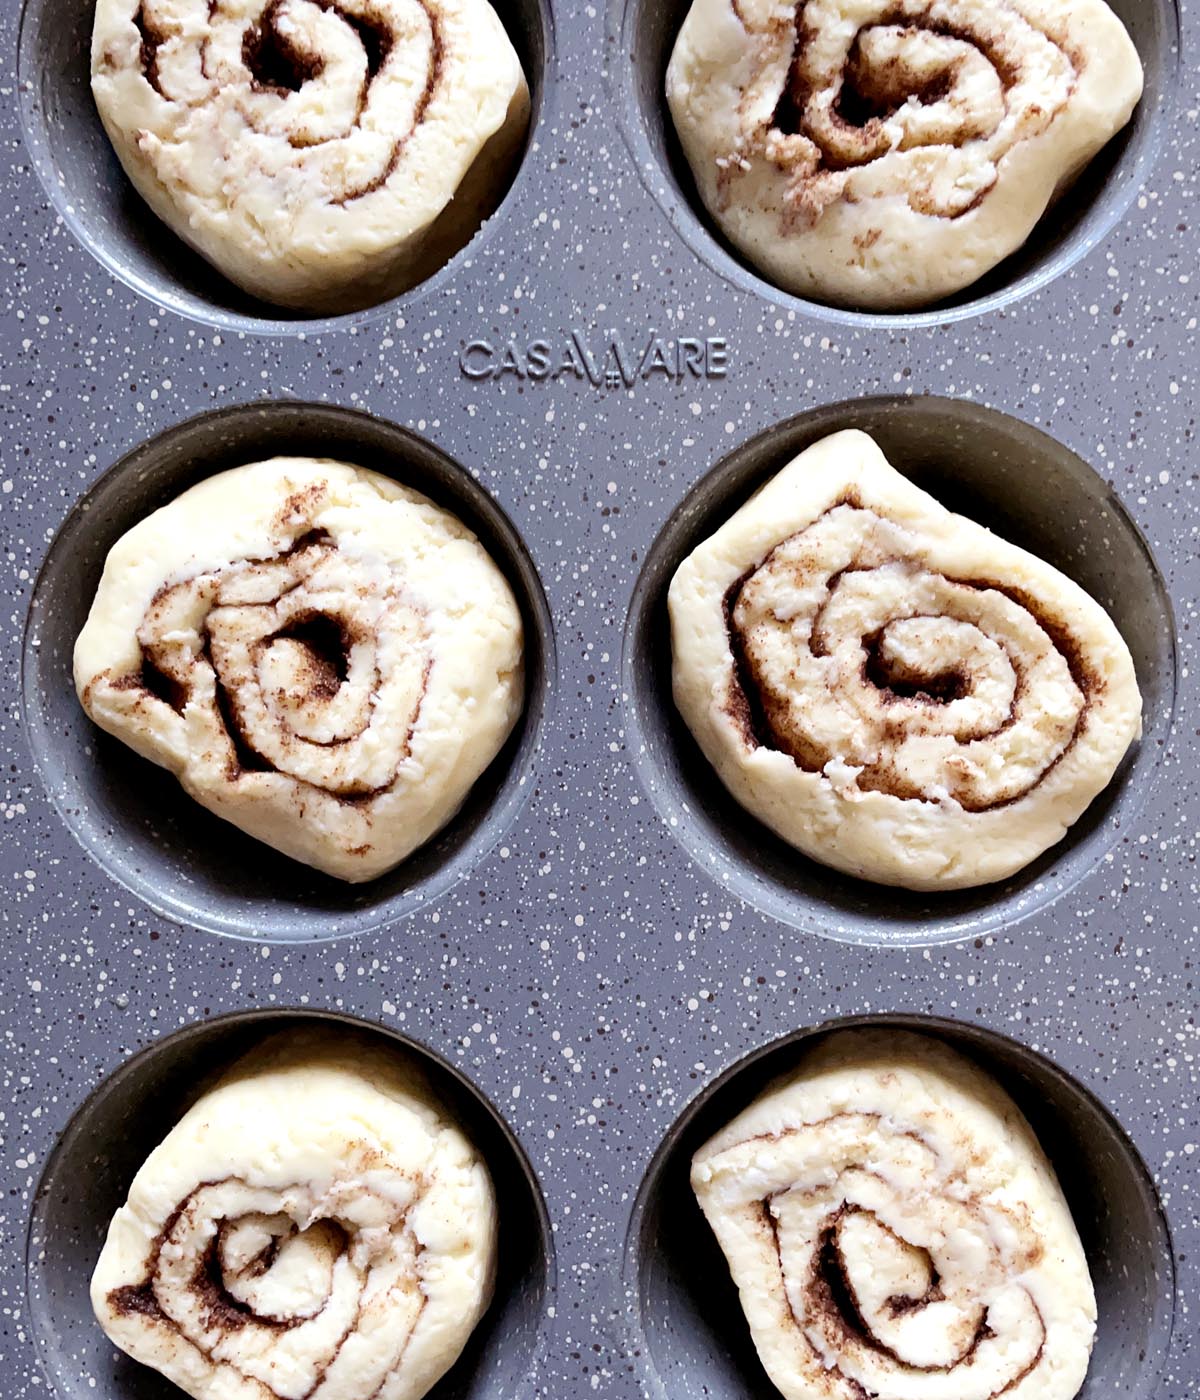 Raw dough cinnamon rolls in a grey muffin tin.